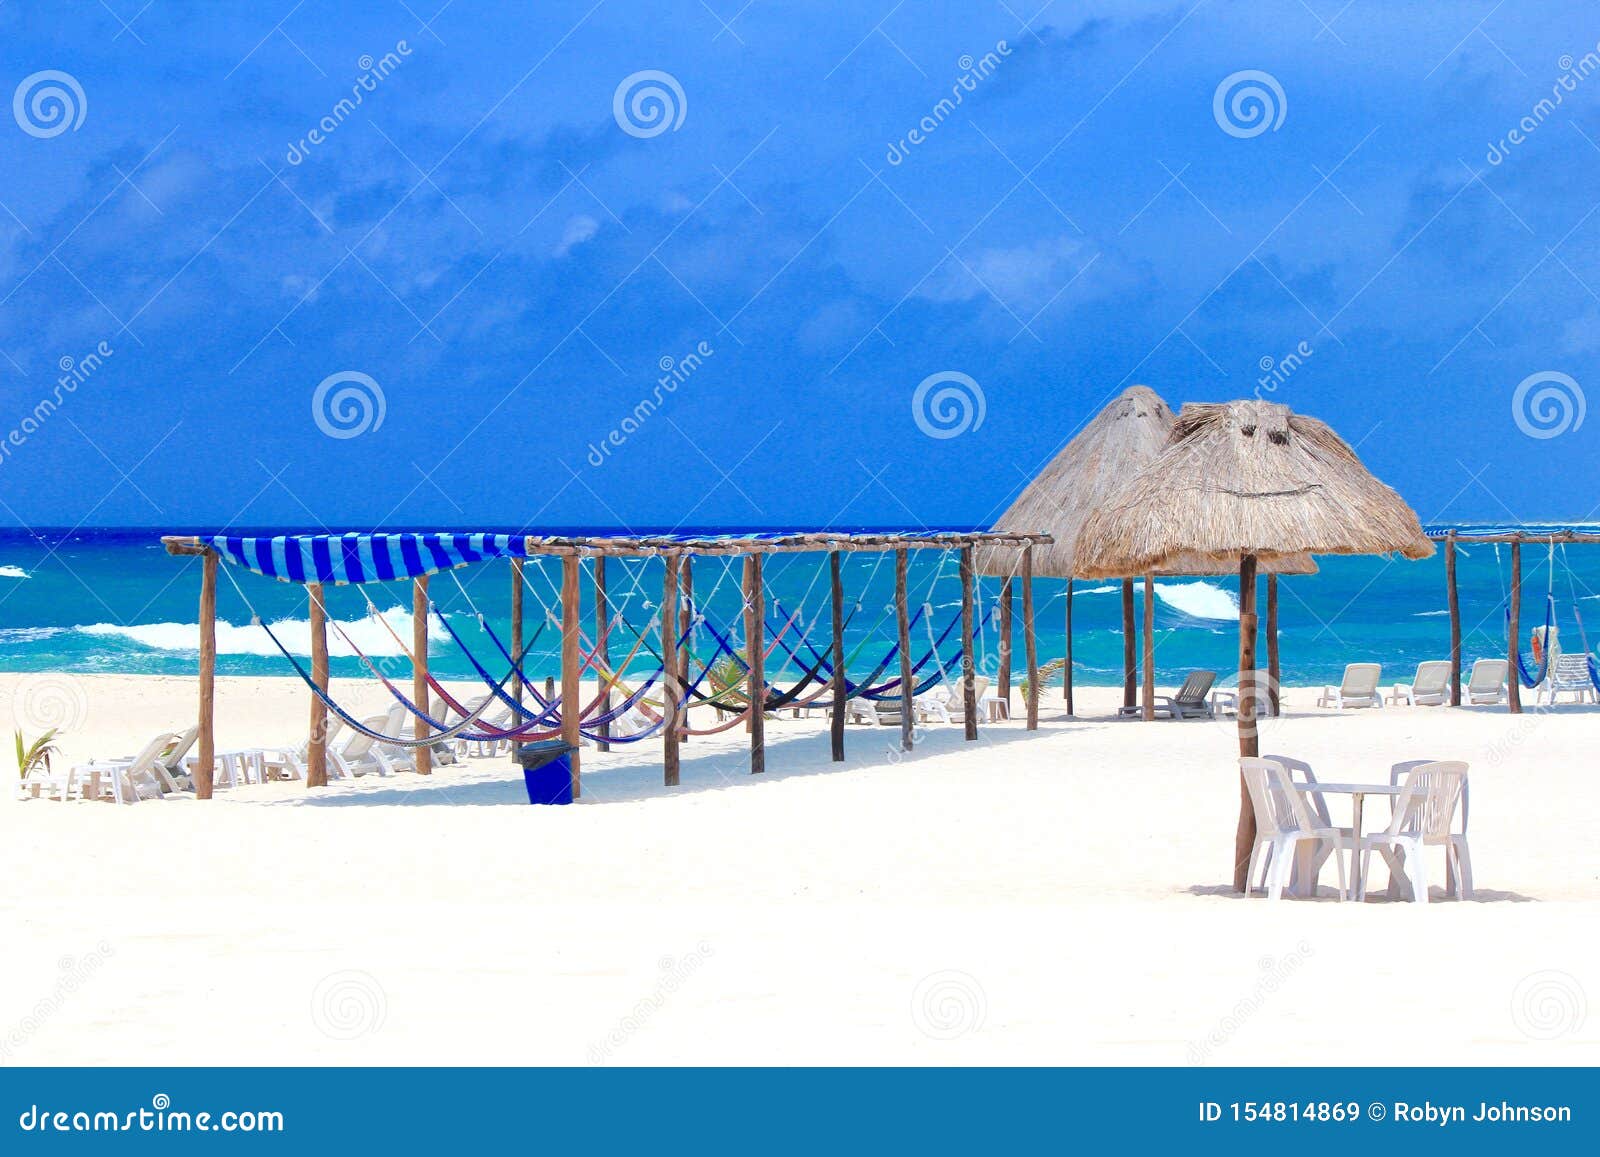 beautiful beach in the bahamas with hammocks